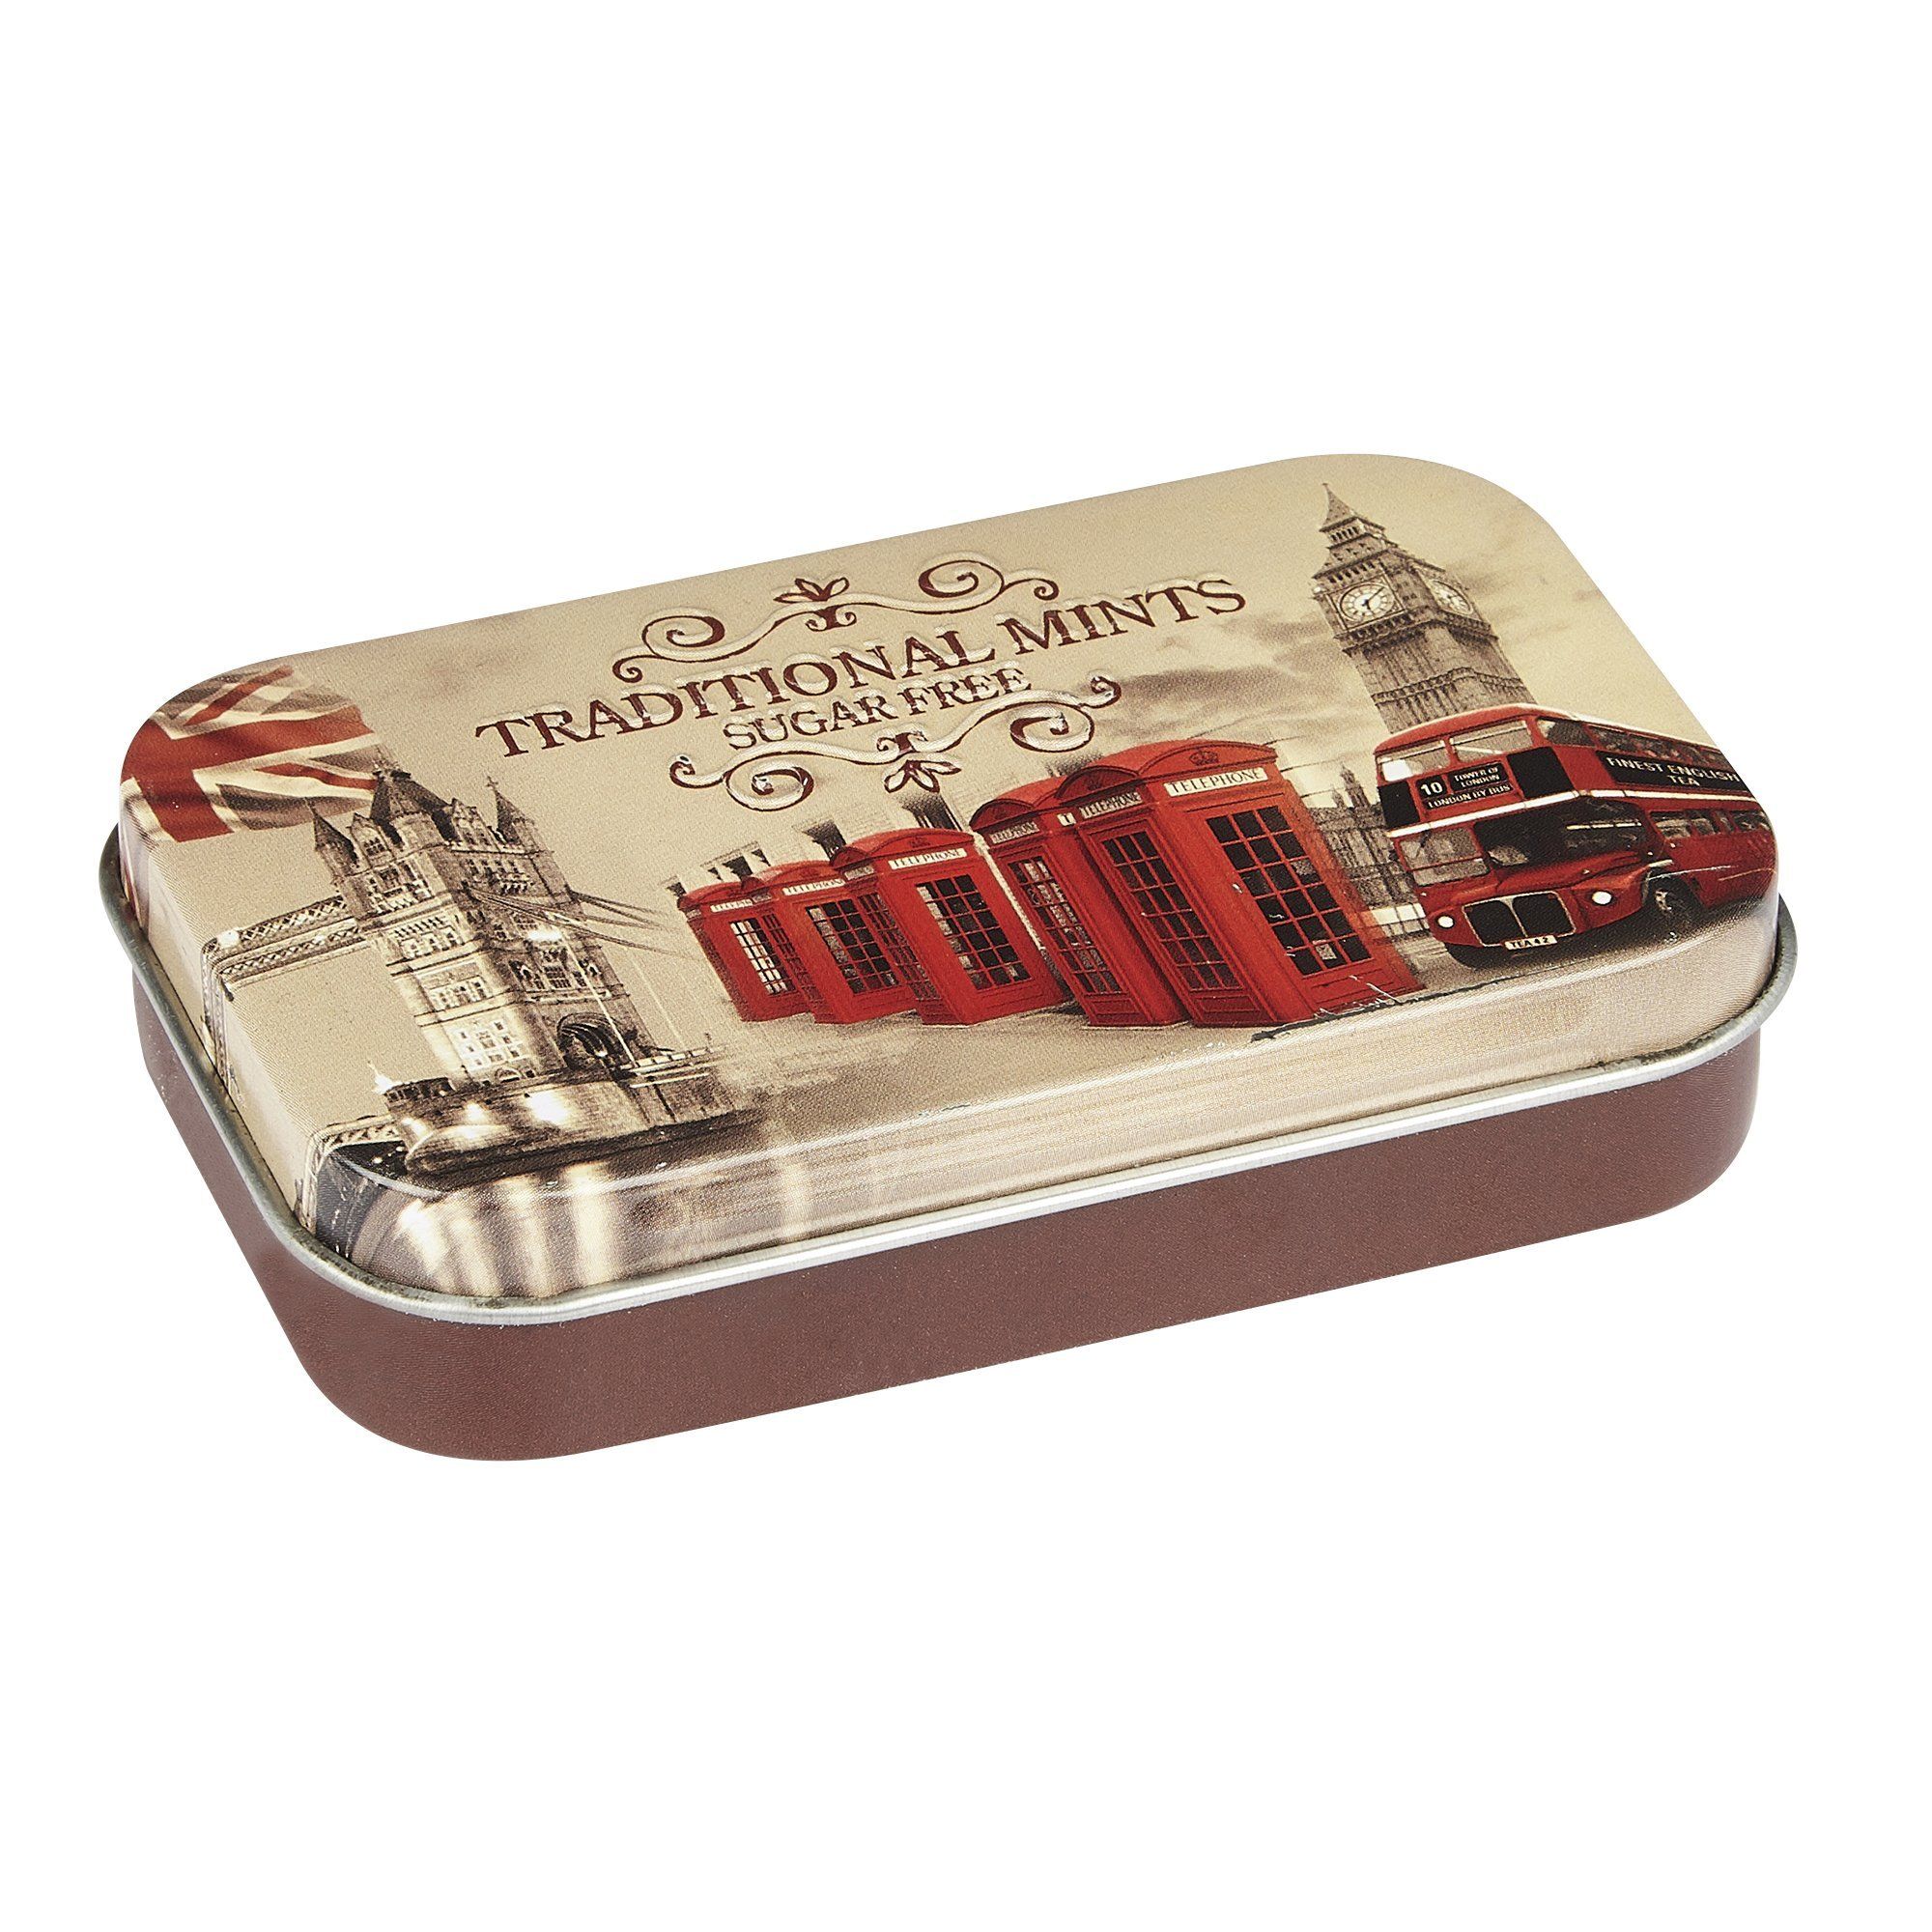 Vintage England Sugar Free Mints Pocket Tin, Travel Gifts